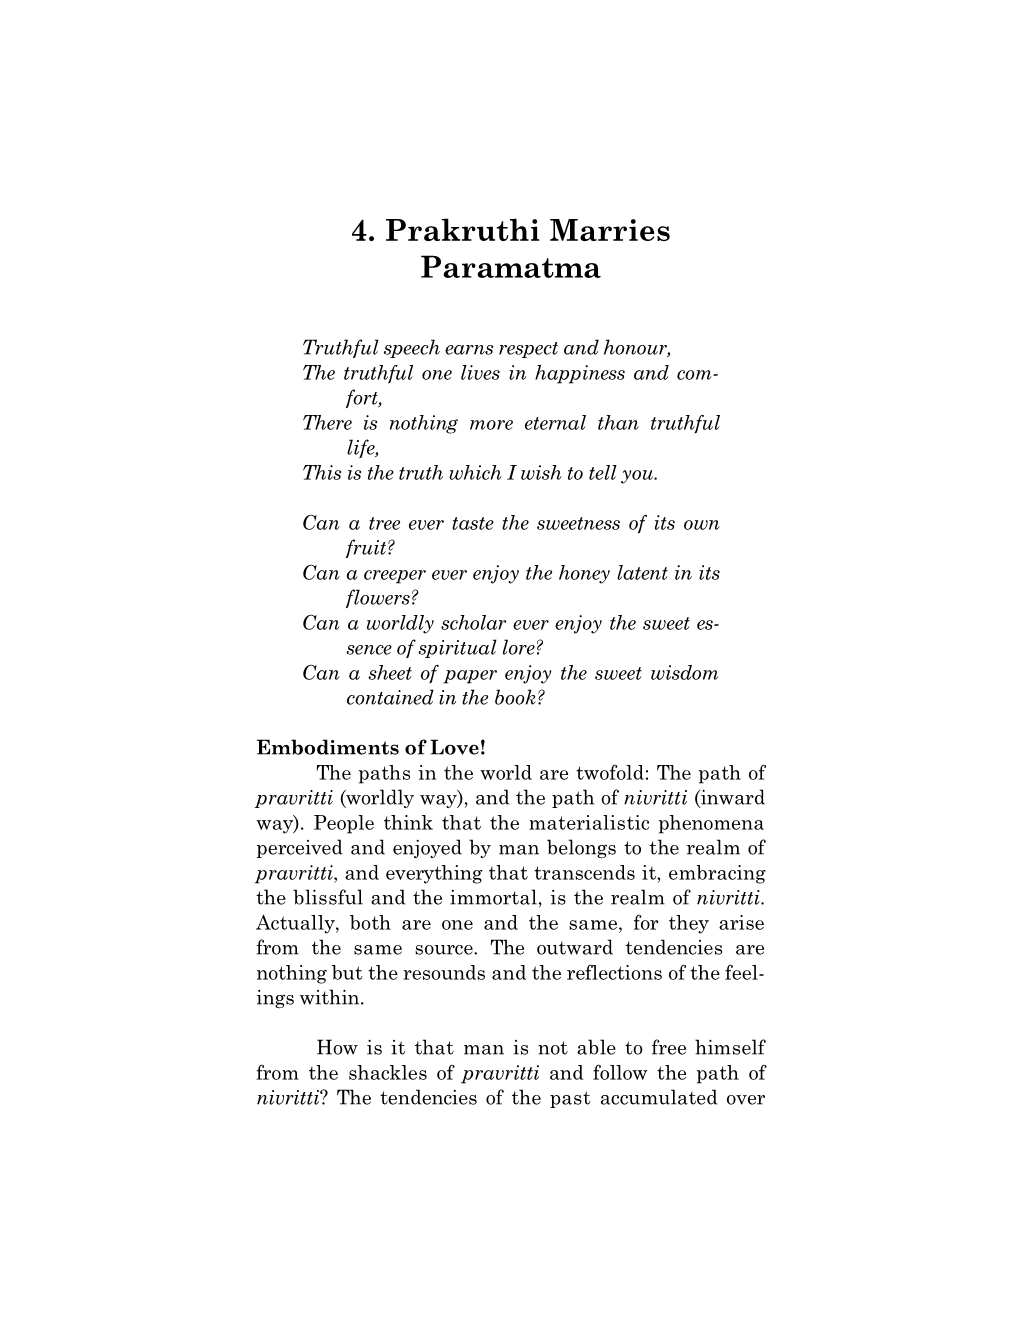 4. Prakruthi Marries Paramatma